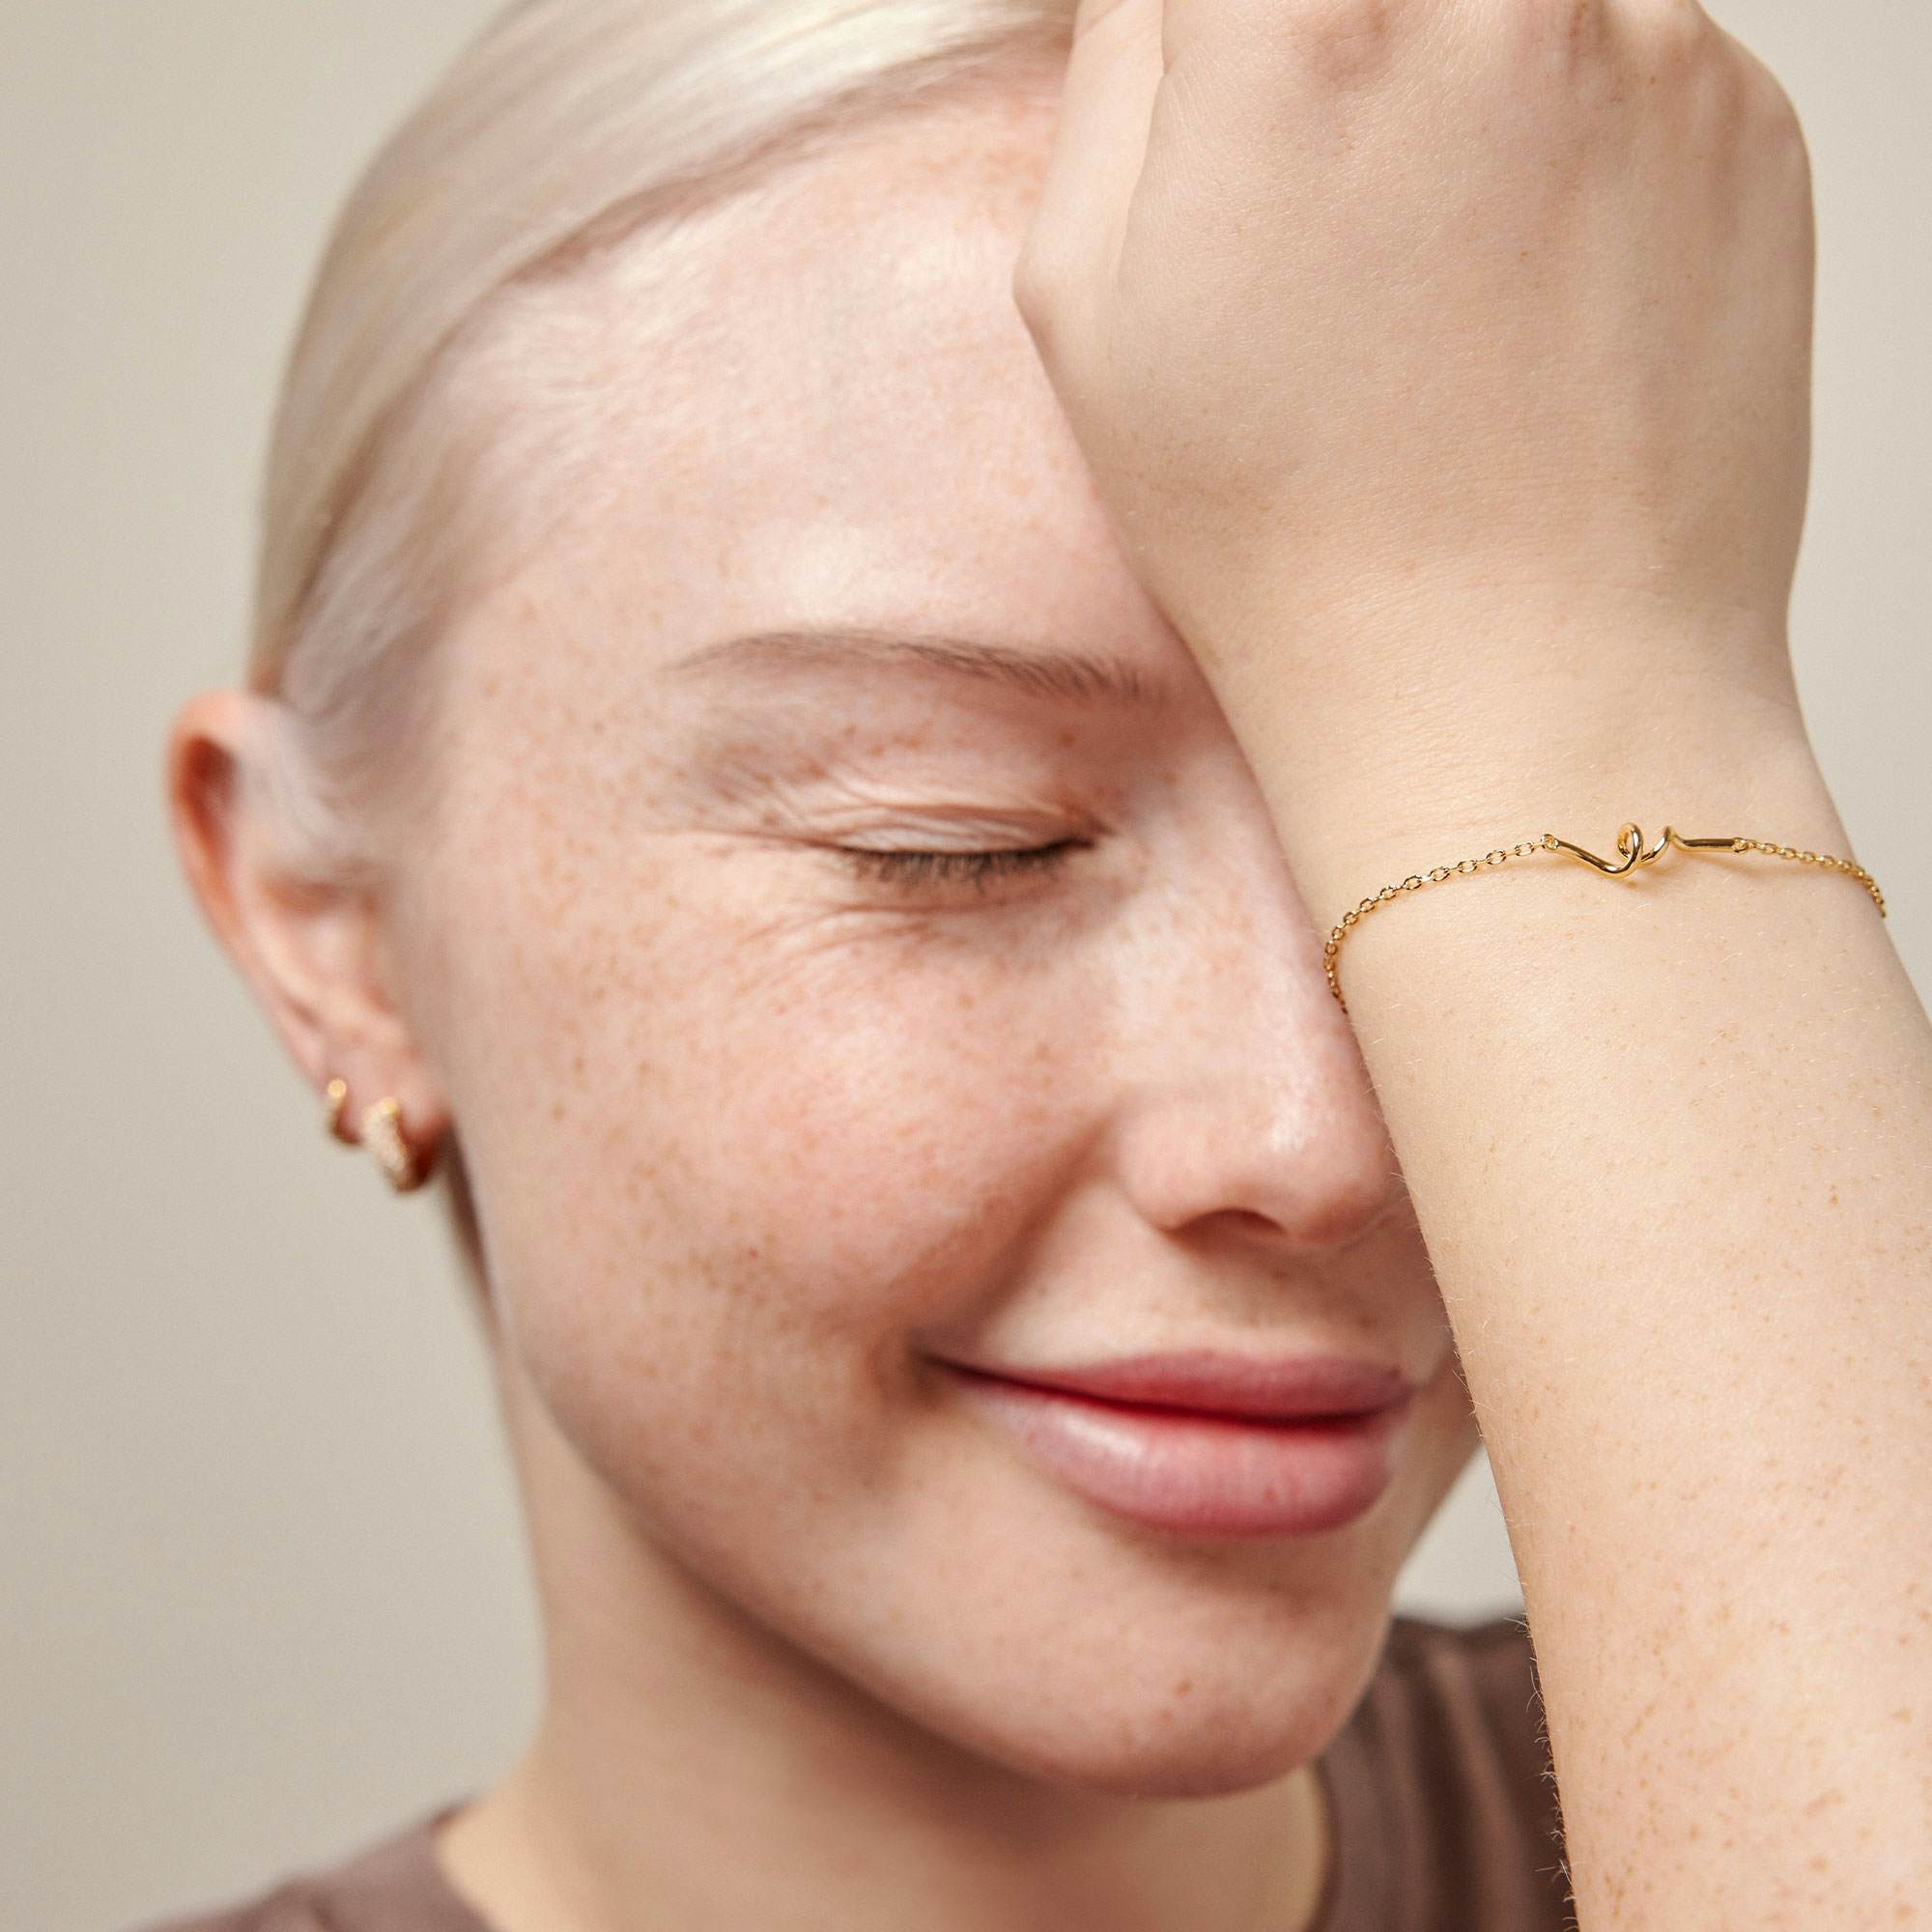 Twist gold-plated bracelet